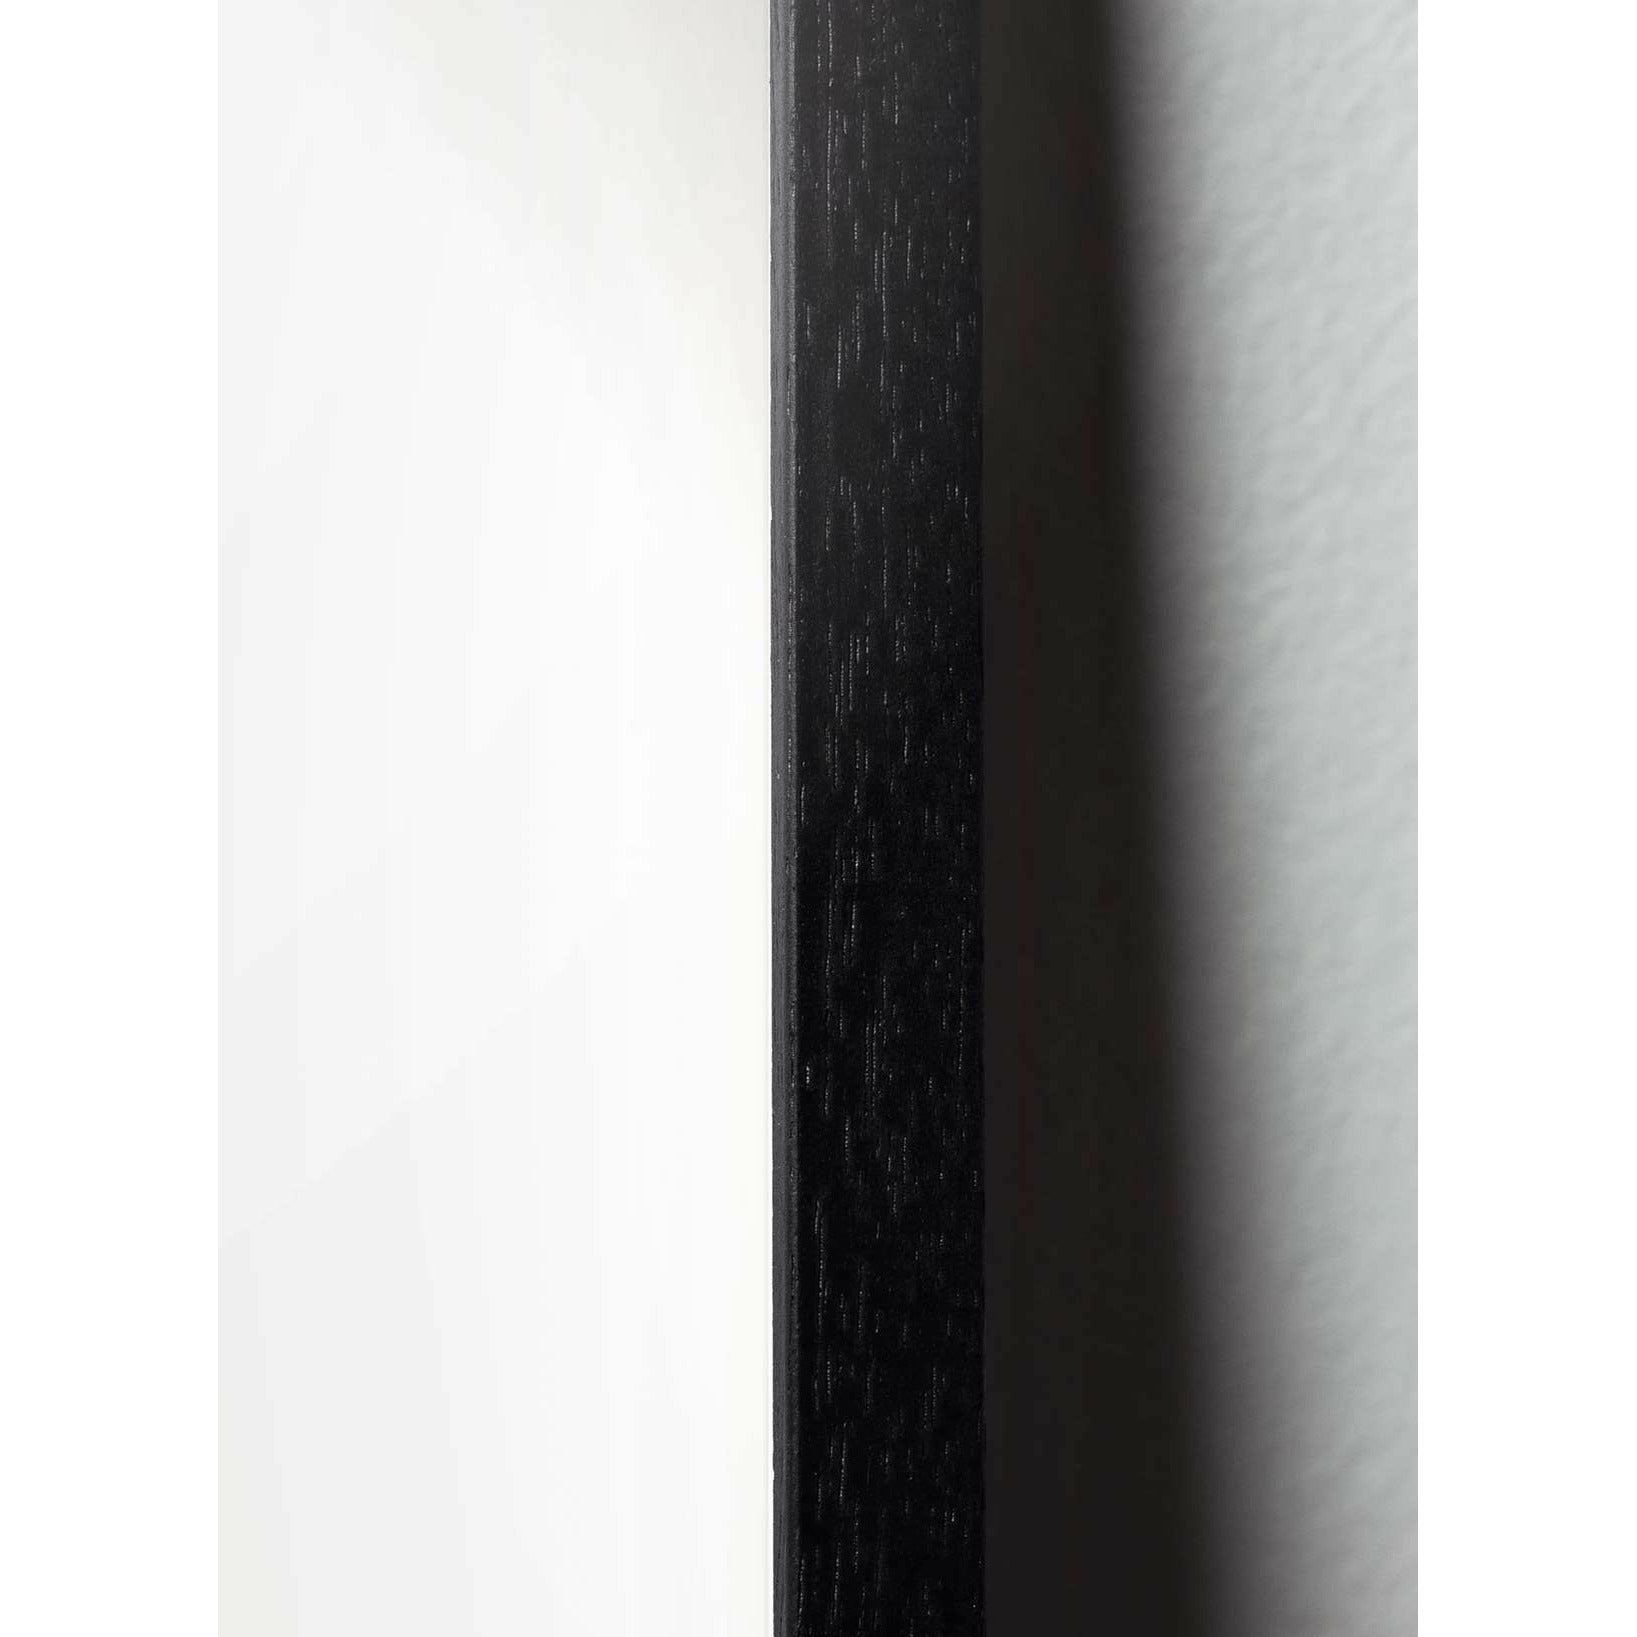 Brainchild Snowdrop Design Icon Poster, Frame In Black Lacquered Wood 50x70 Cm, Grey